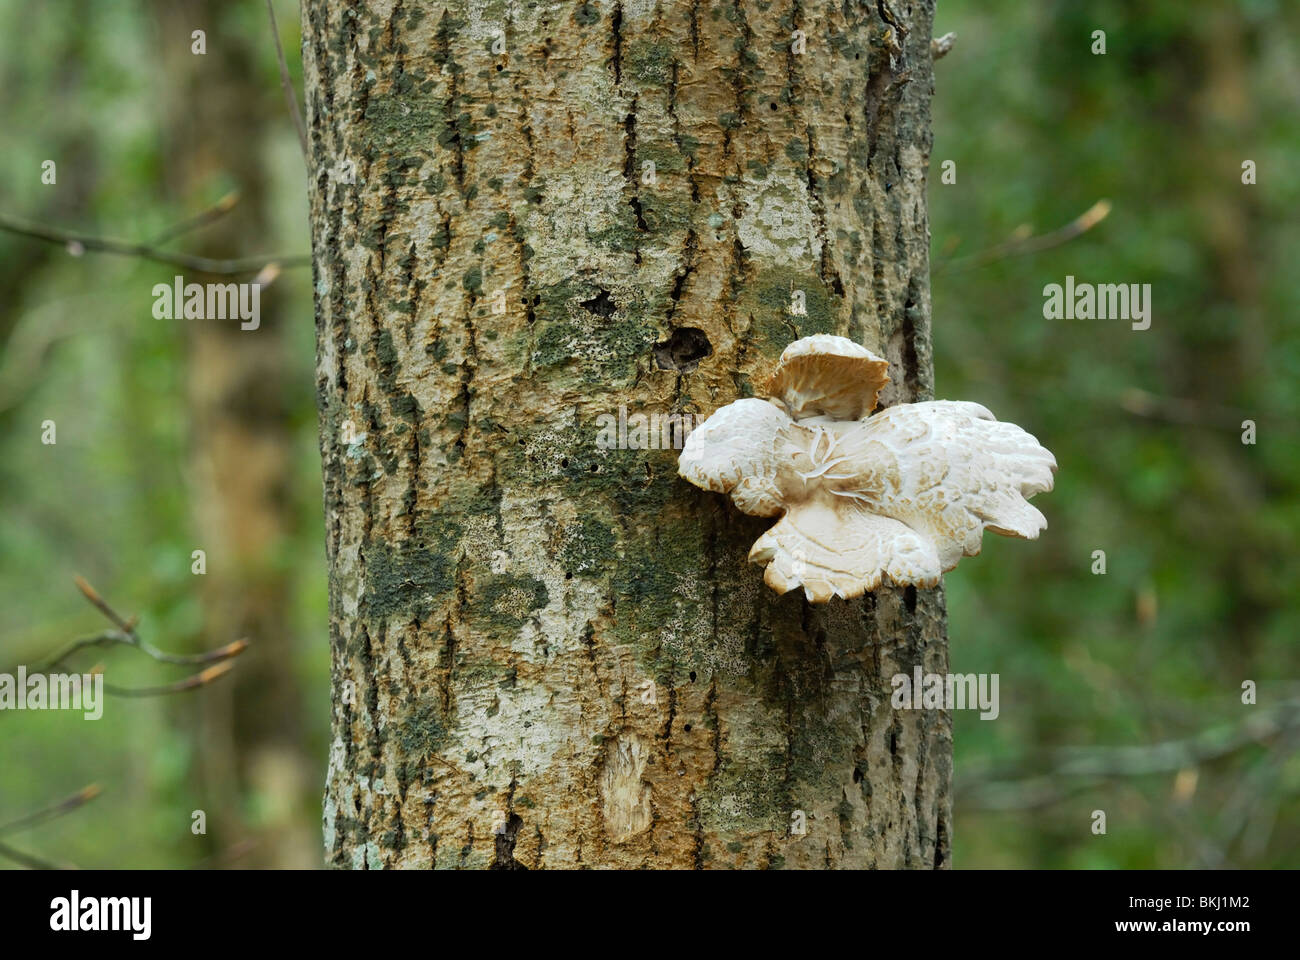 Pleurotus cf. cornucopiae fungus with lichen, Pyrenula macrospora growing on an Ash tree trunk, Wales, UK. Stock Photo